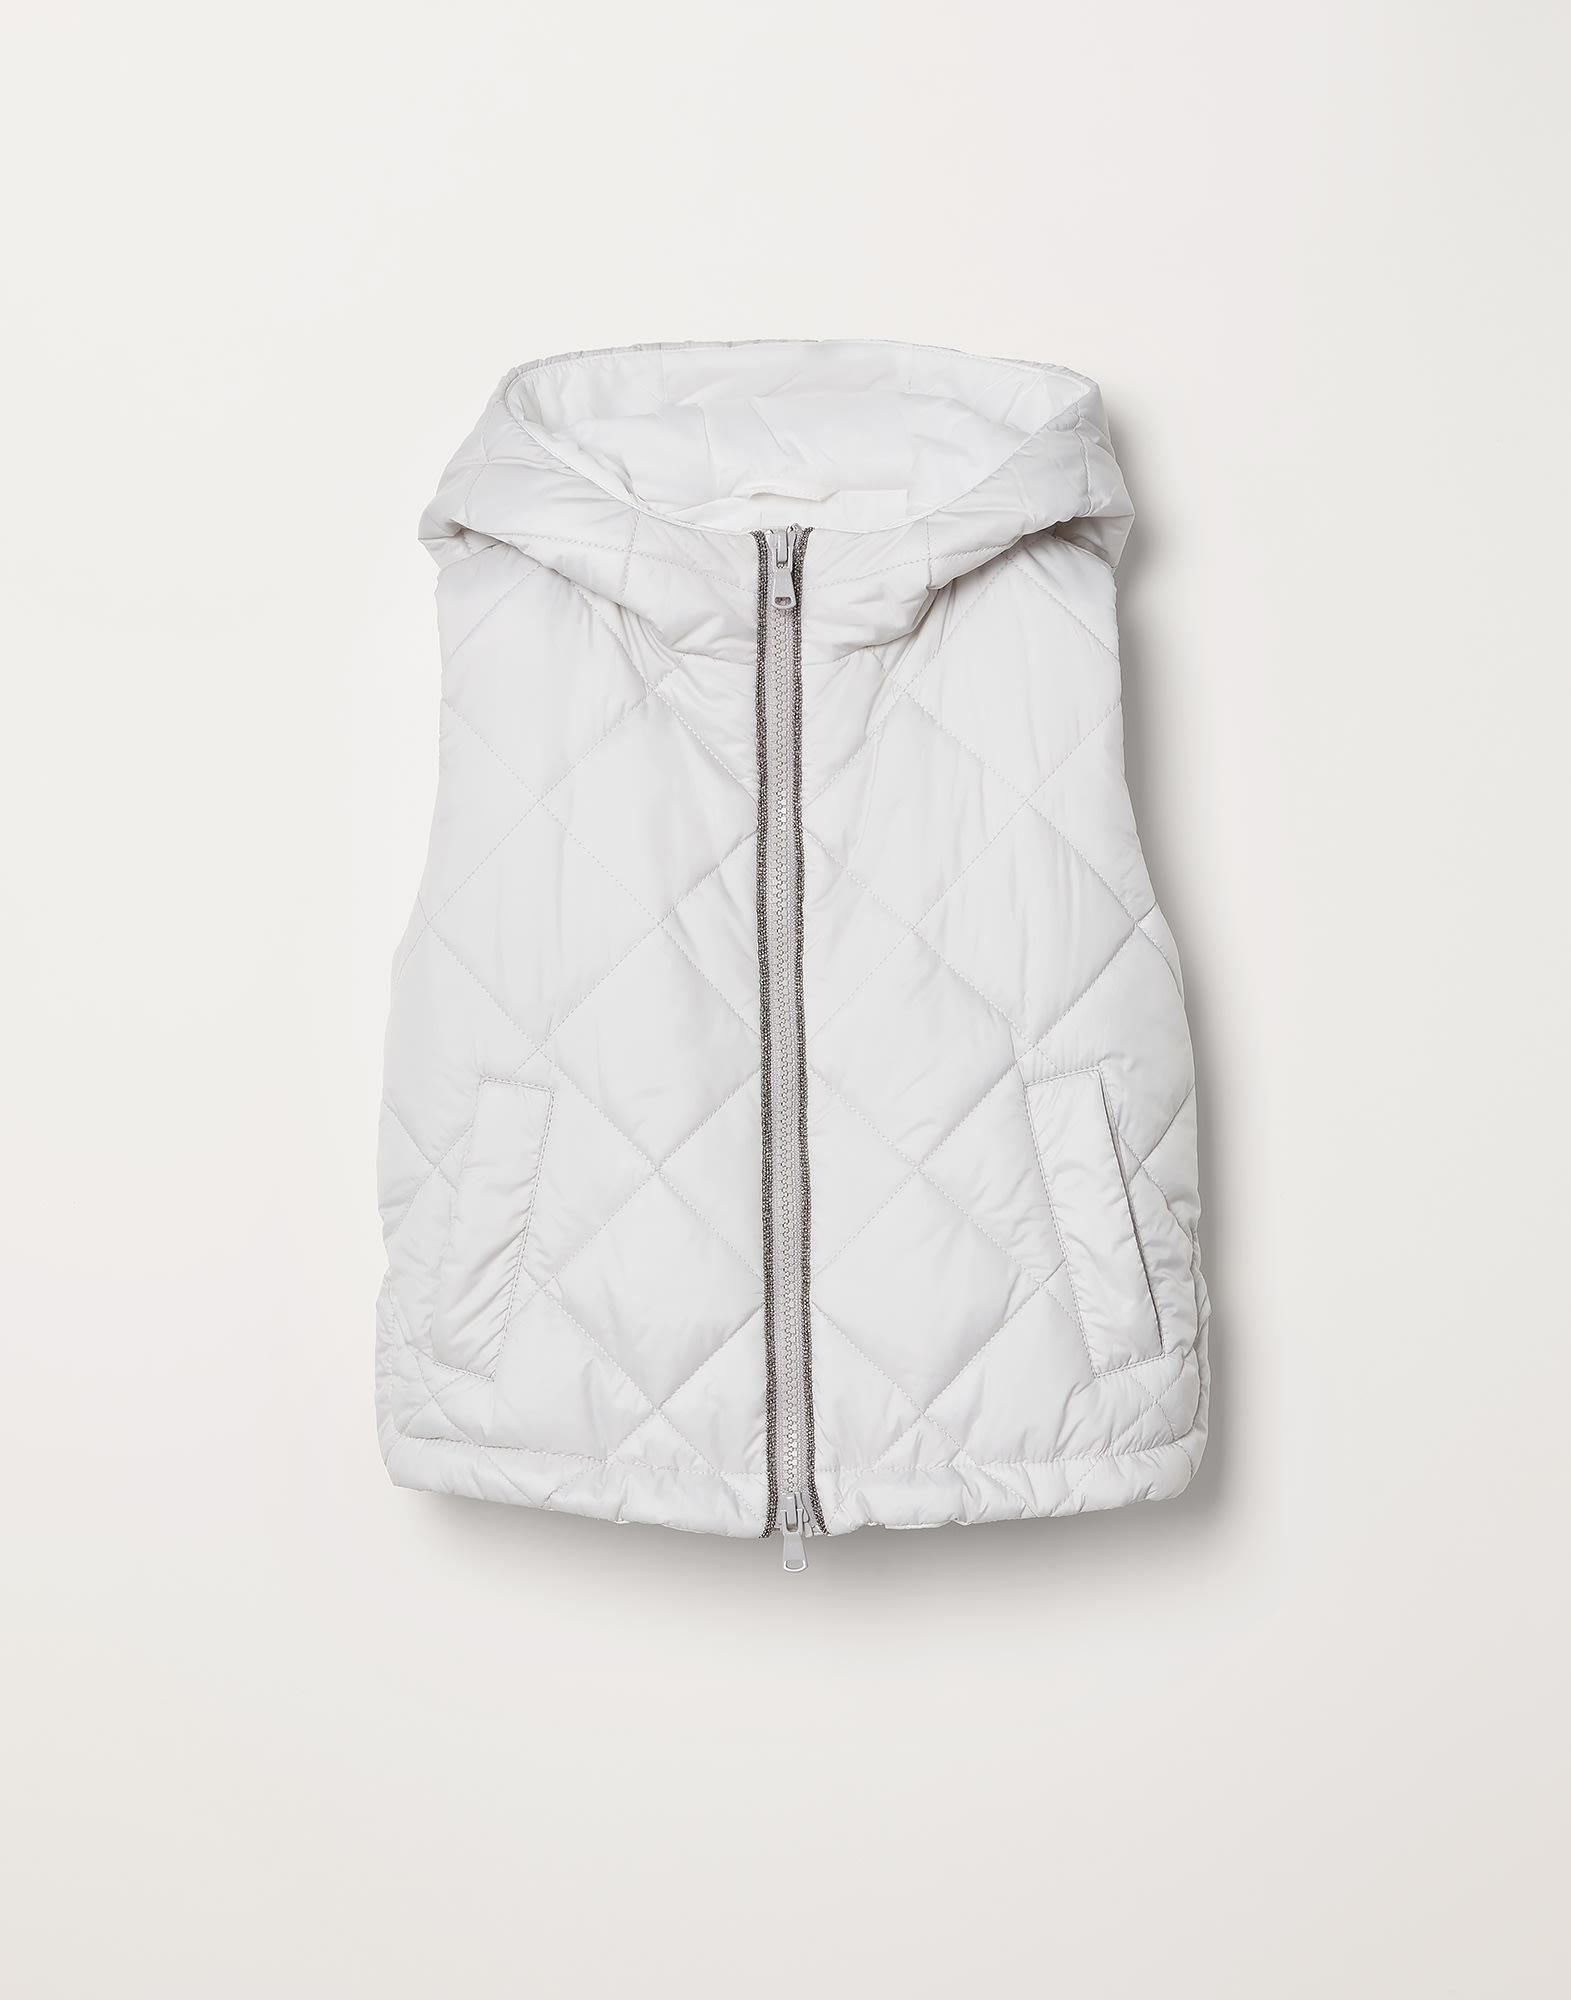 Nylon vest with padding